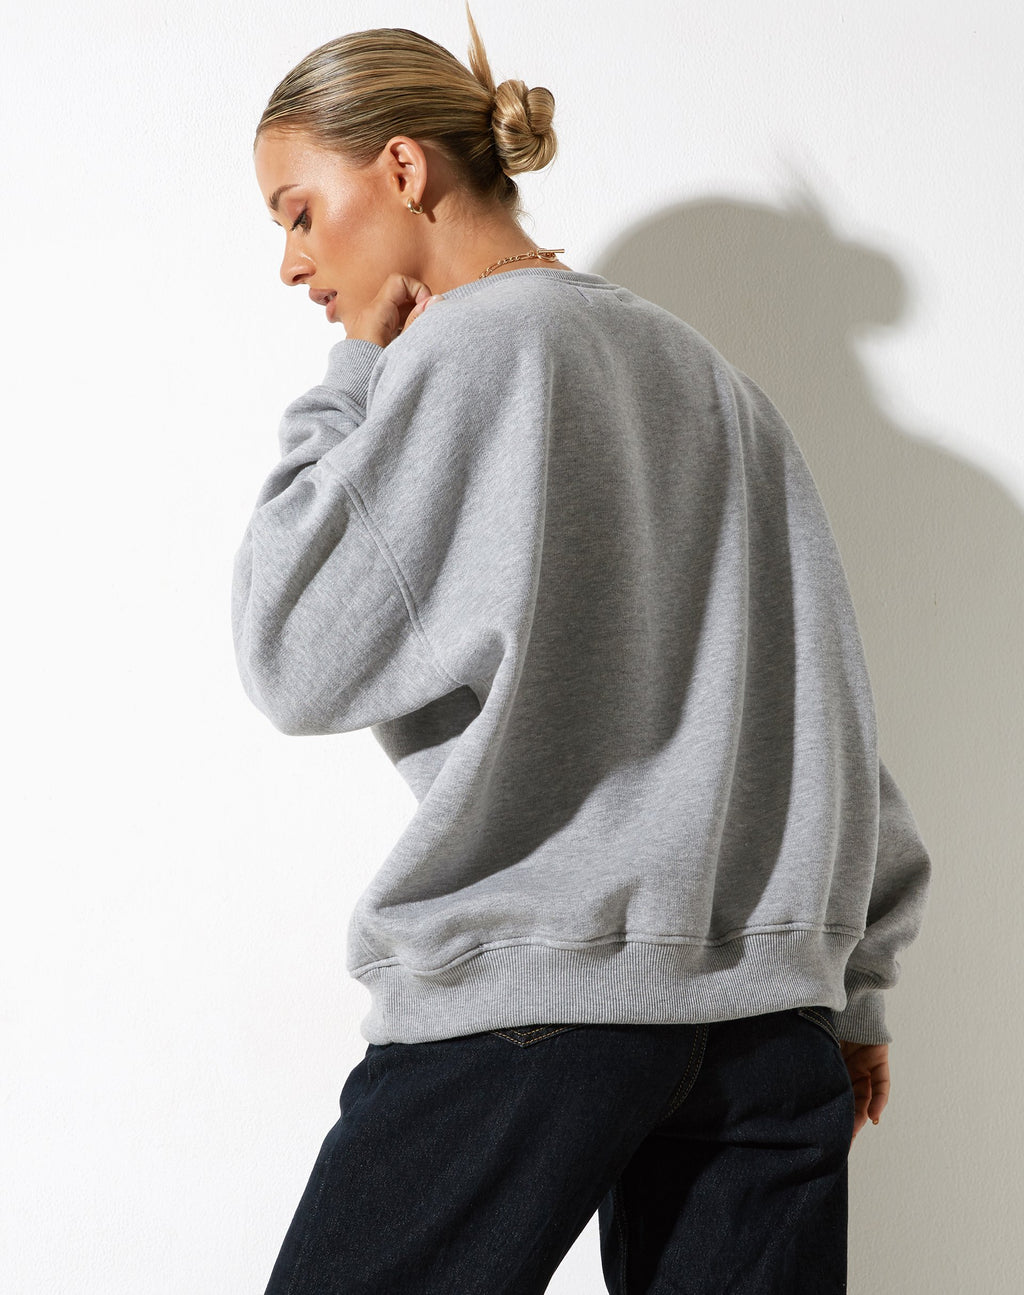 Glan Sweatshirt in Grey Marl with 'M Classics' Embro